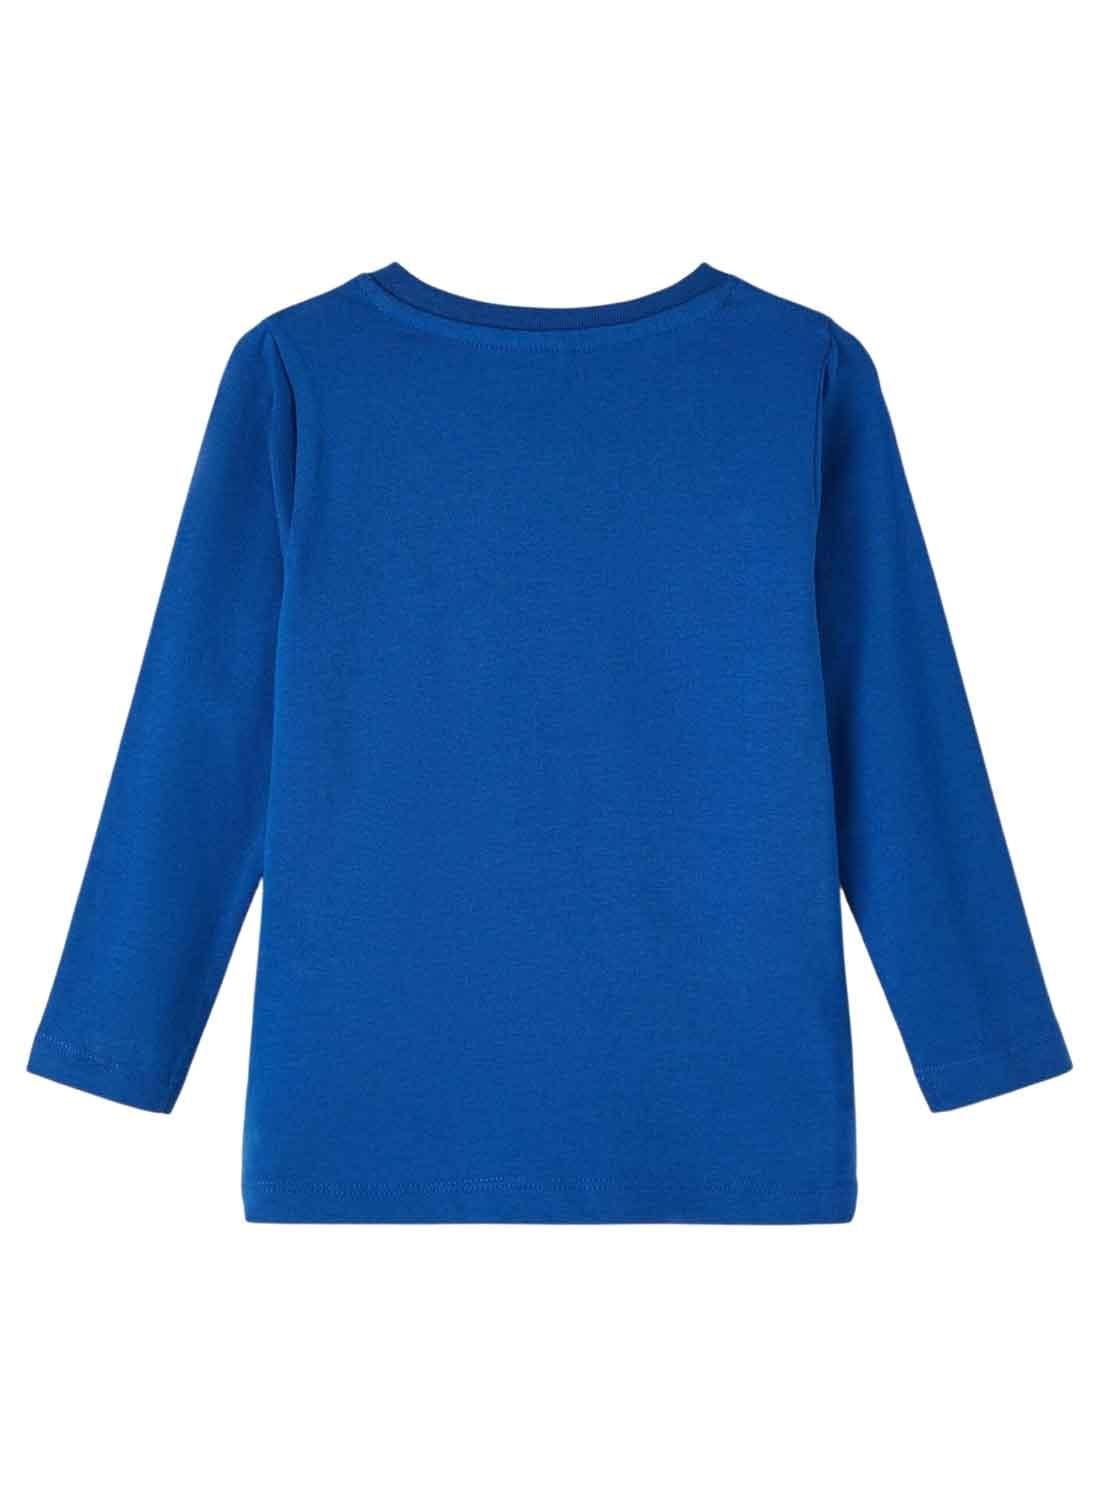 T-Shirt Name It Leone Blu per Bambino